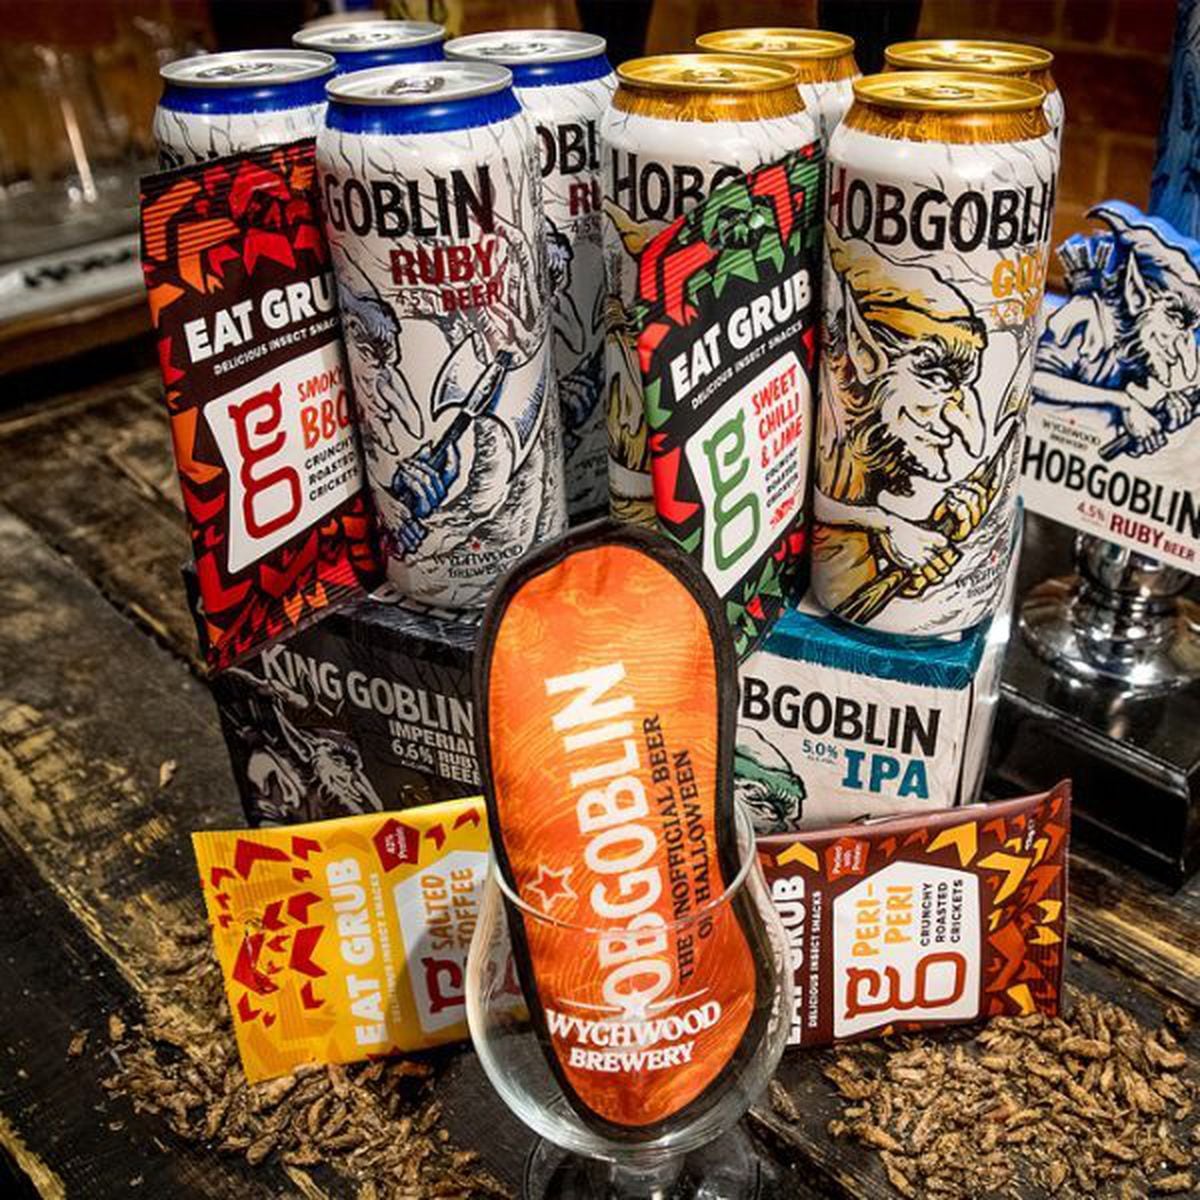 Hobgoblin Beer & Bugs Snack Pack